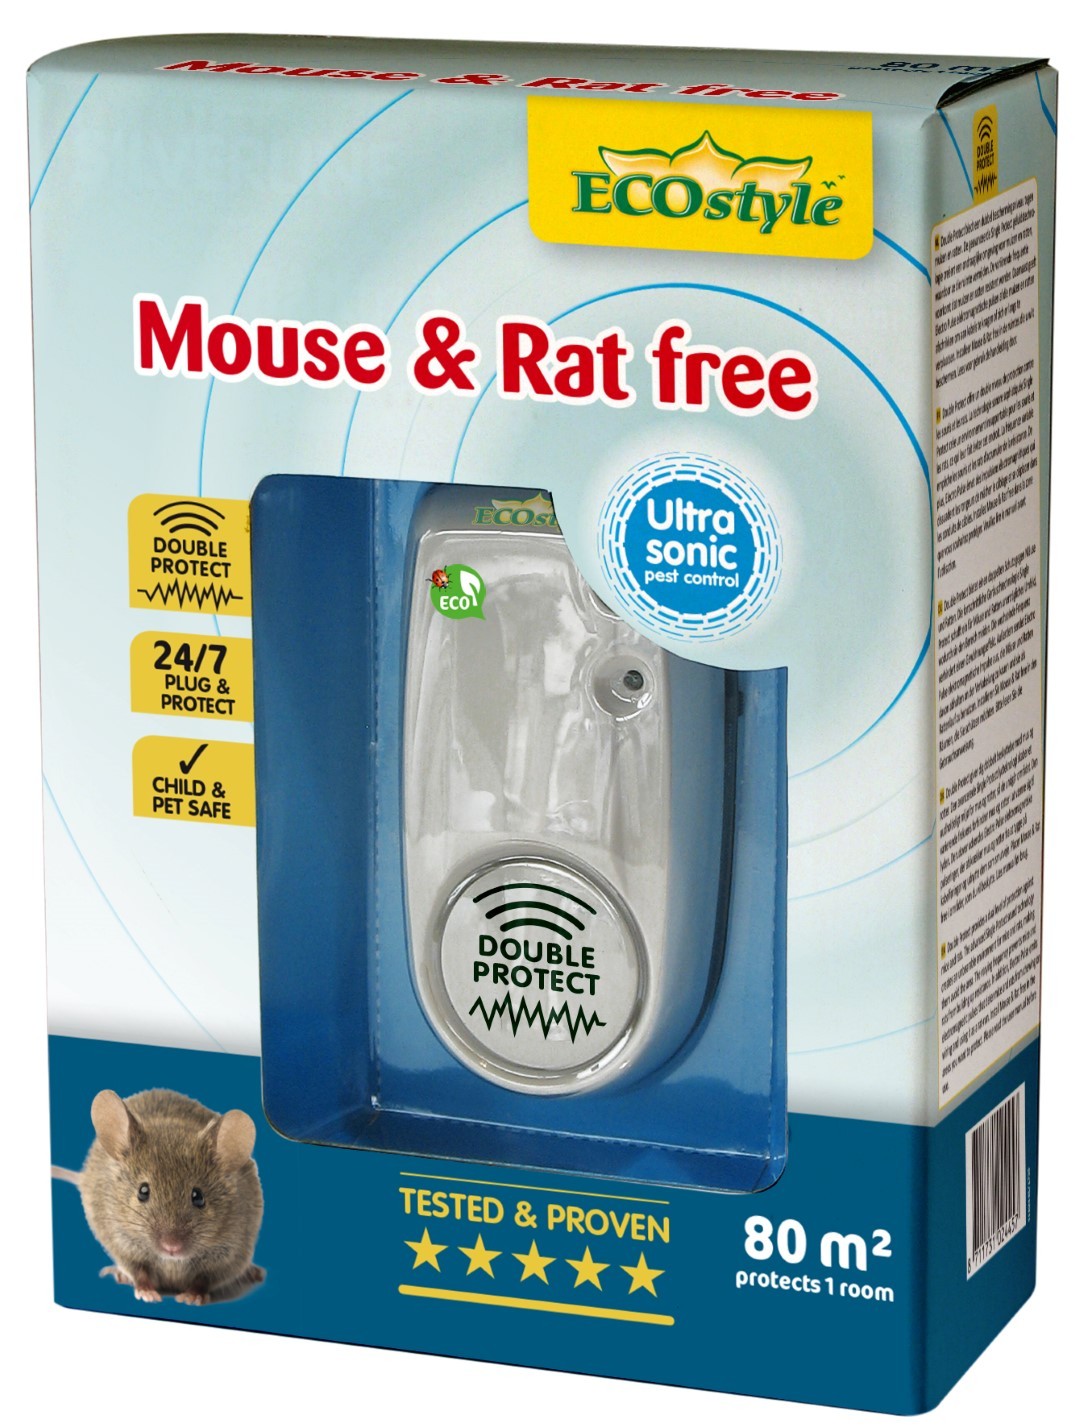 Mouse & Rat free 80 m2